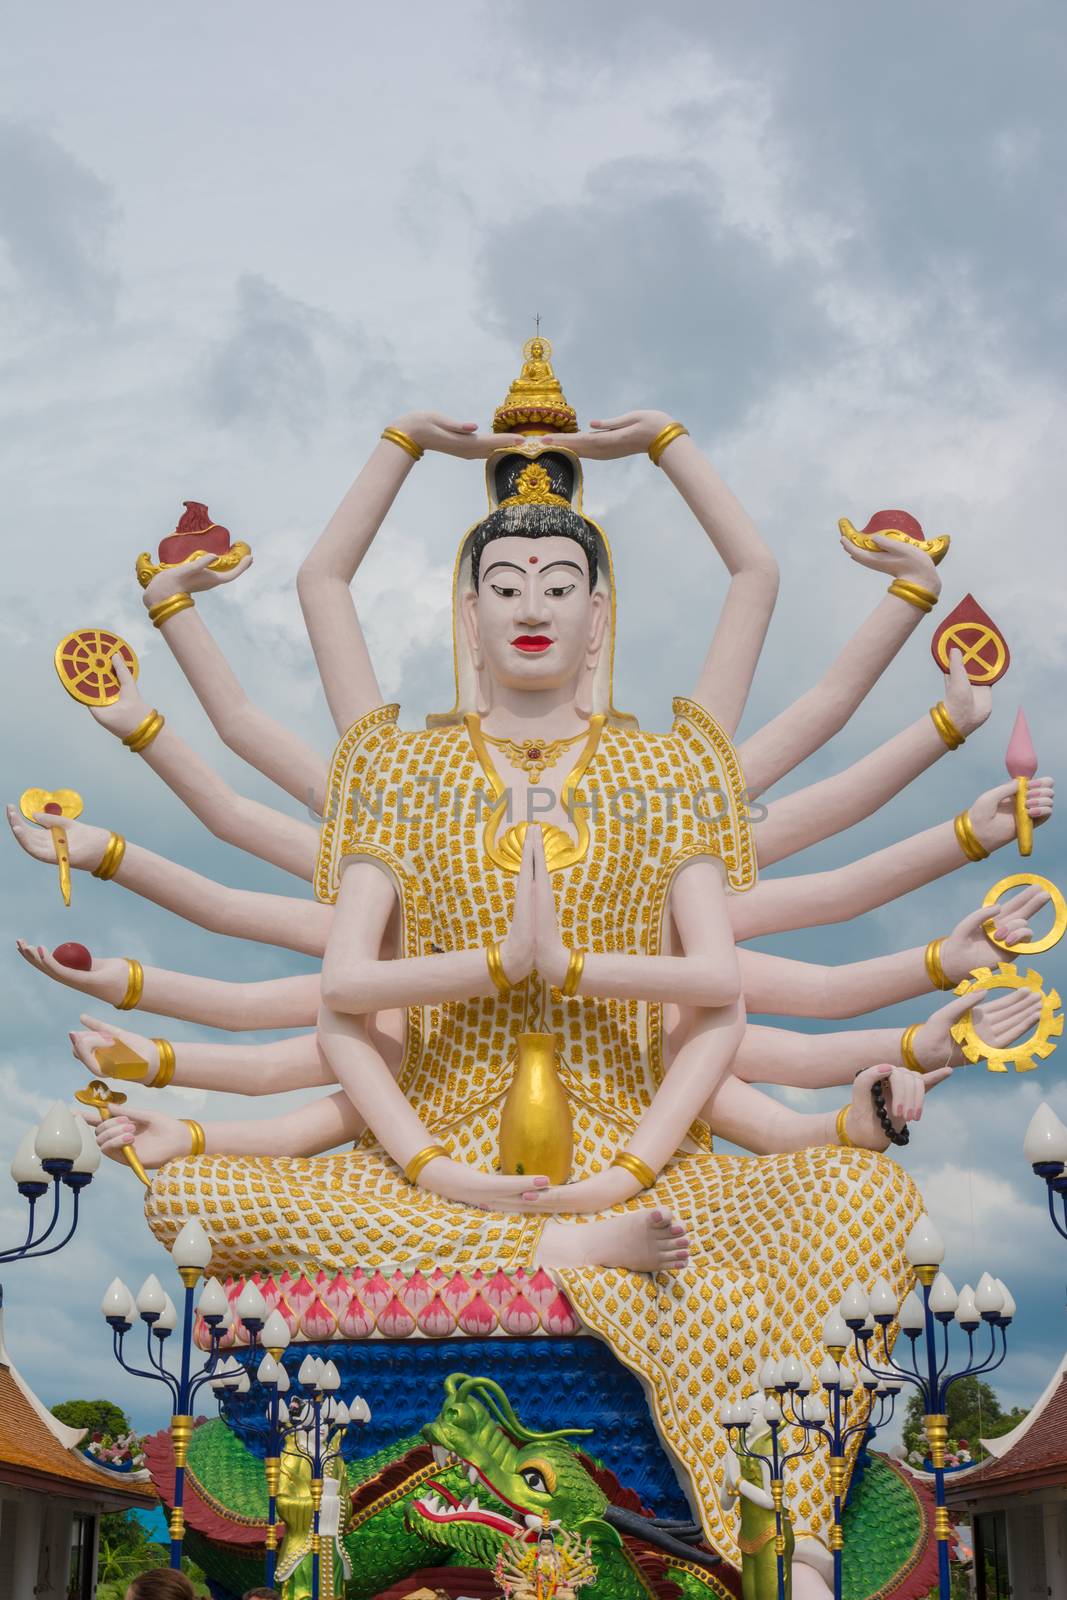 Statue at Big Buddha area in Wat Plai Laem, Koh Samui,Thailand